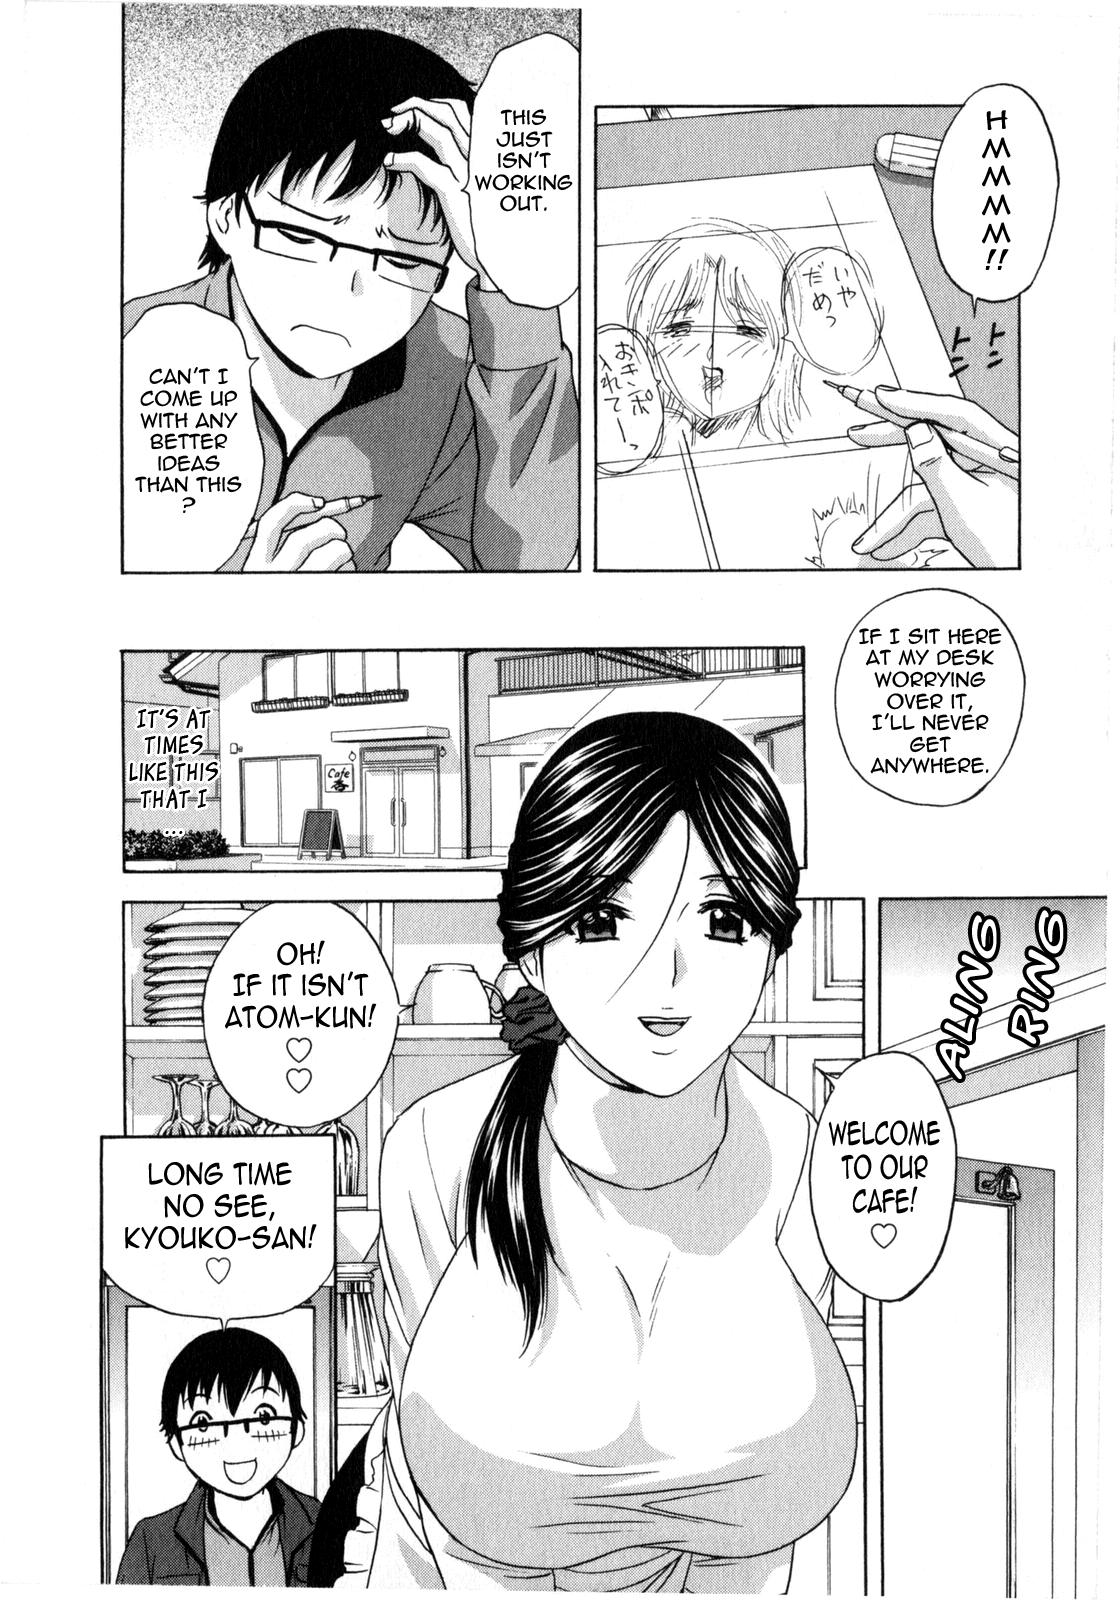 [Hidemaru] Life with Married Women Just Like a Manga 2 - Ch. 1-7 [English] {Tadanohito} 47